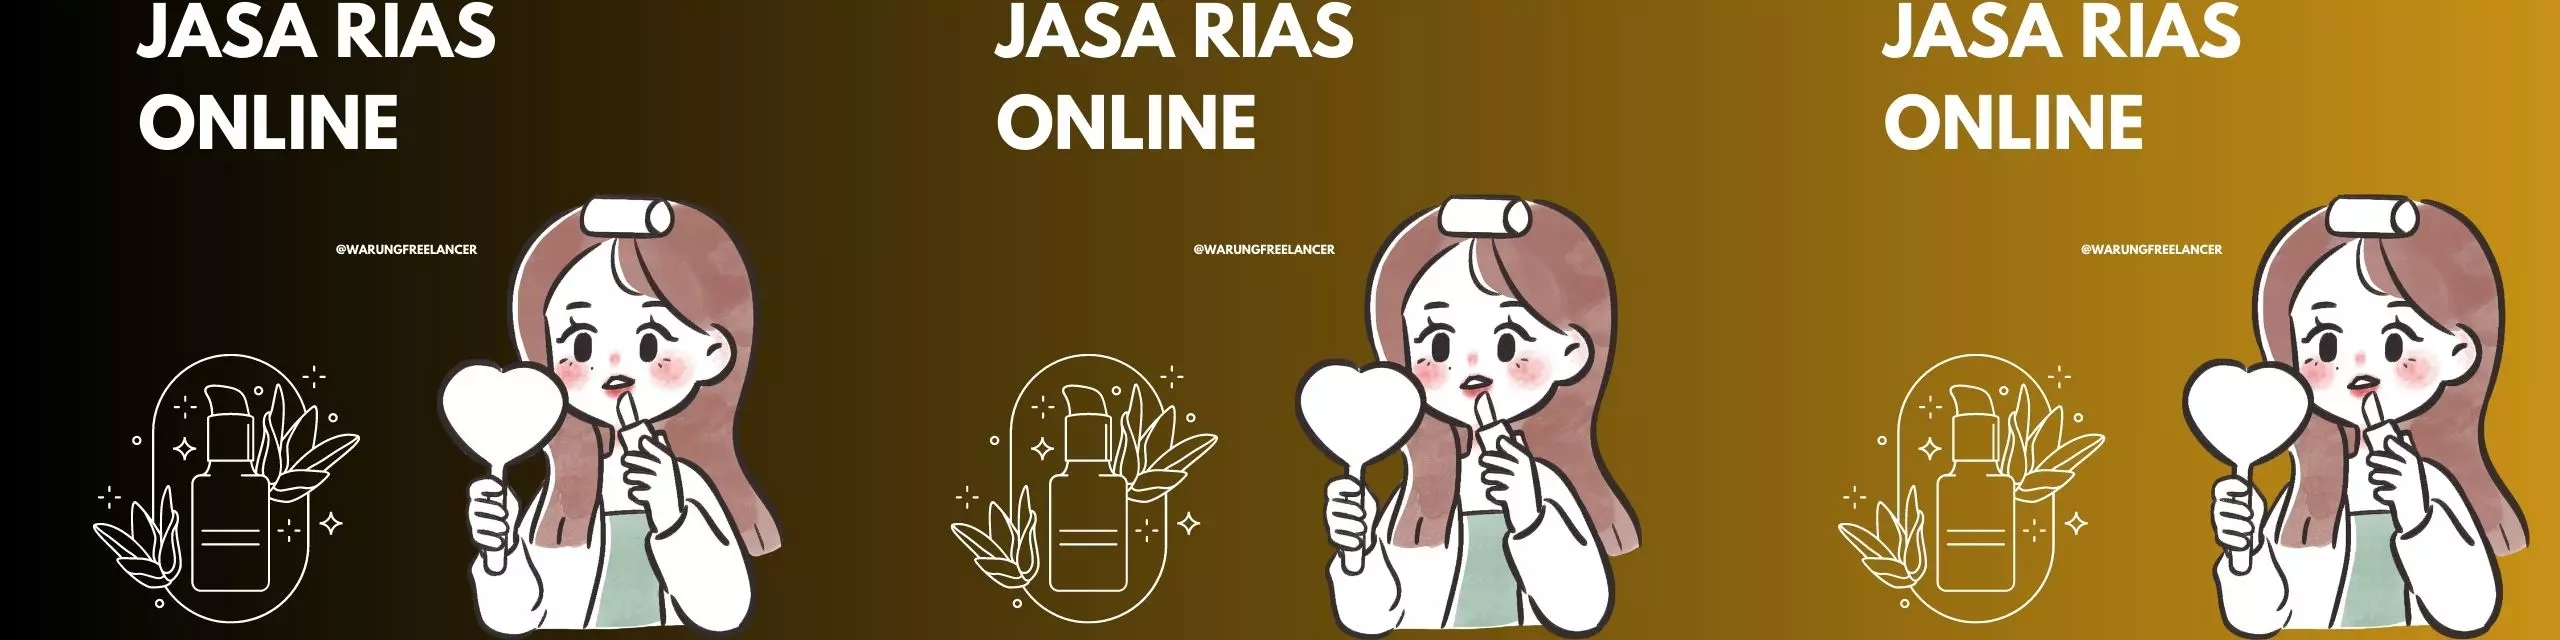 Jasa Rias Online